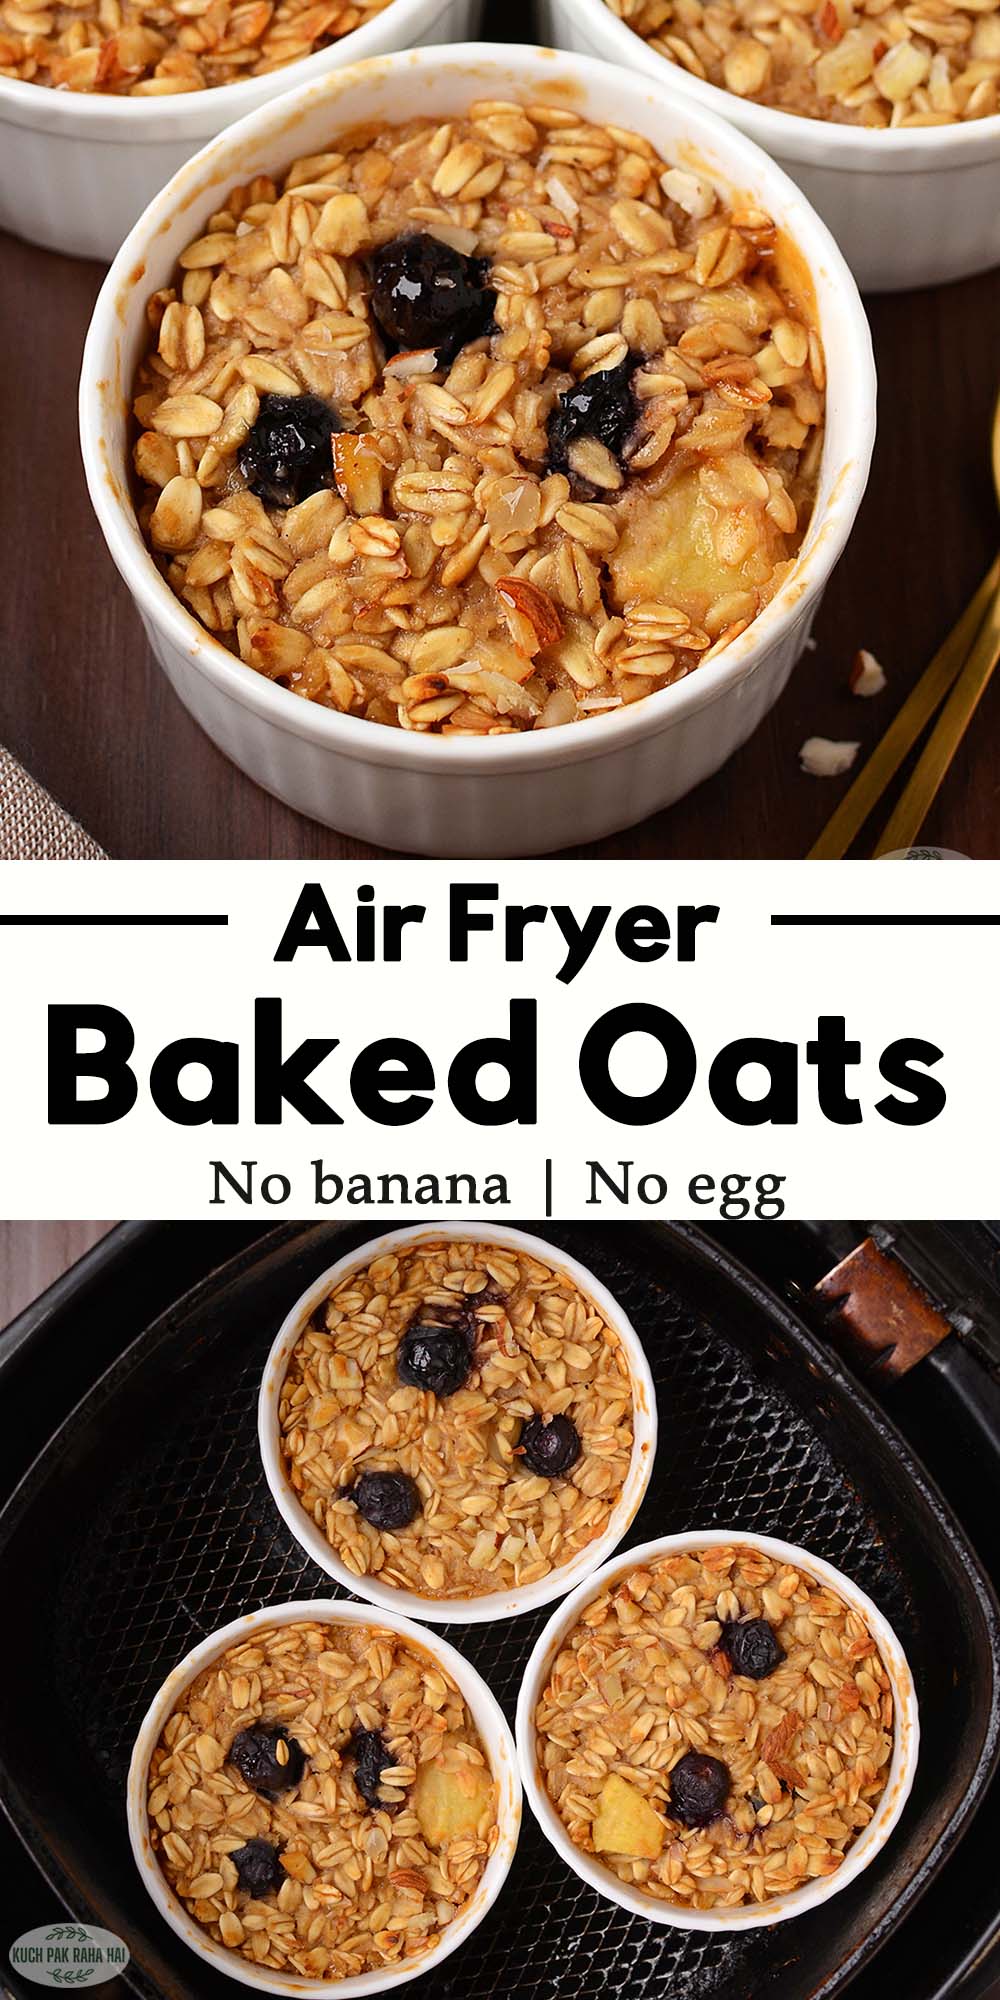 Air fryer baked oats no banana vegan healthy recipe.